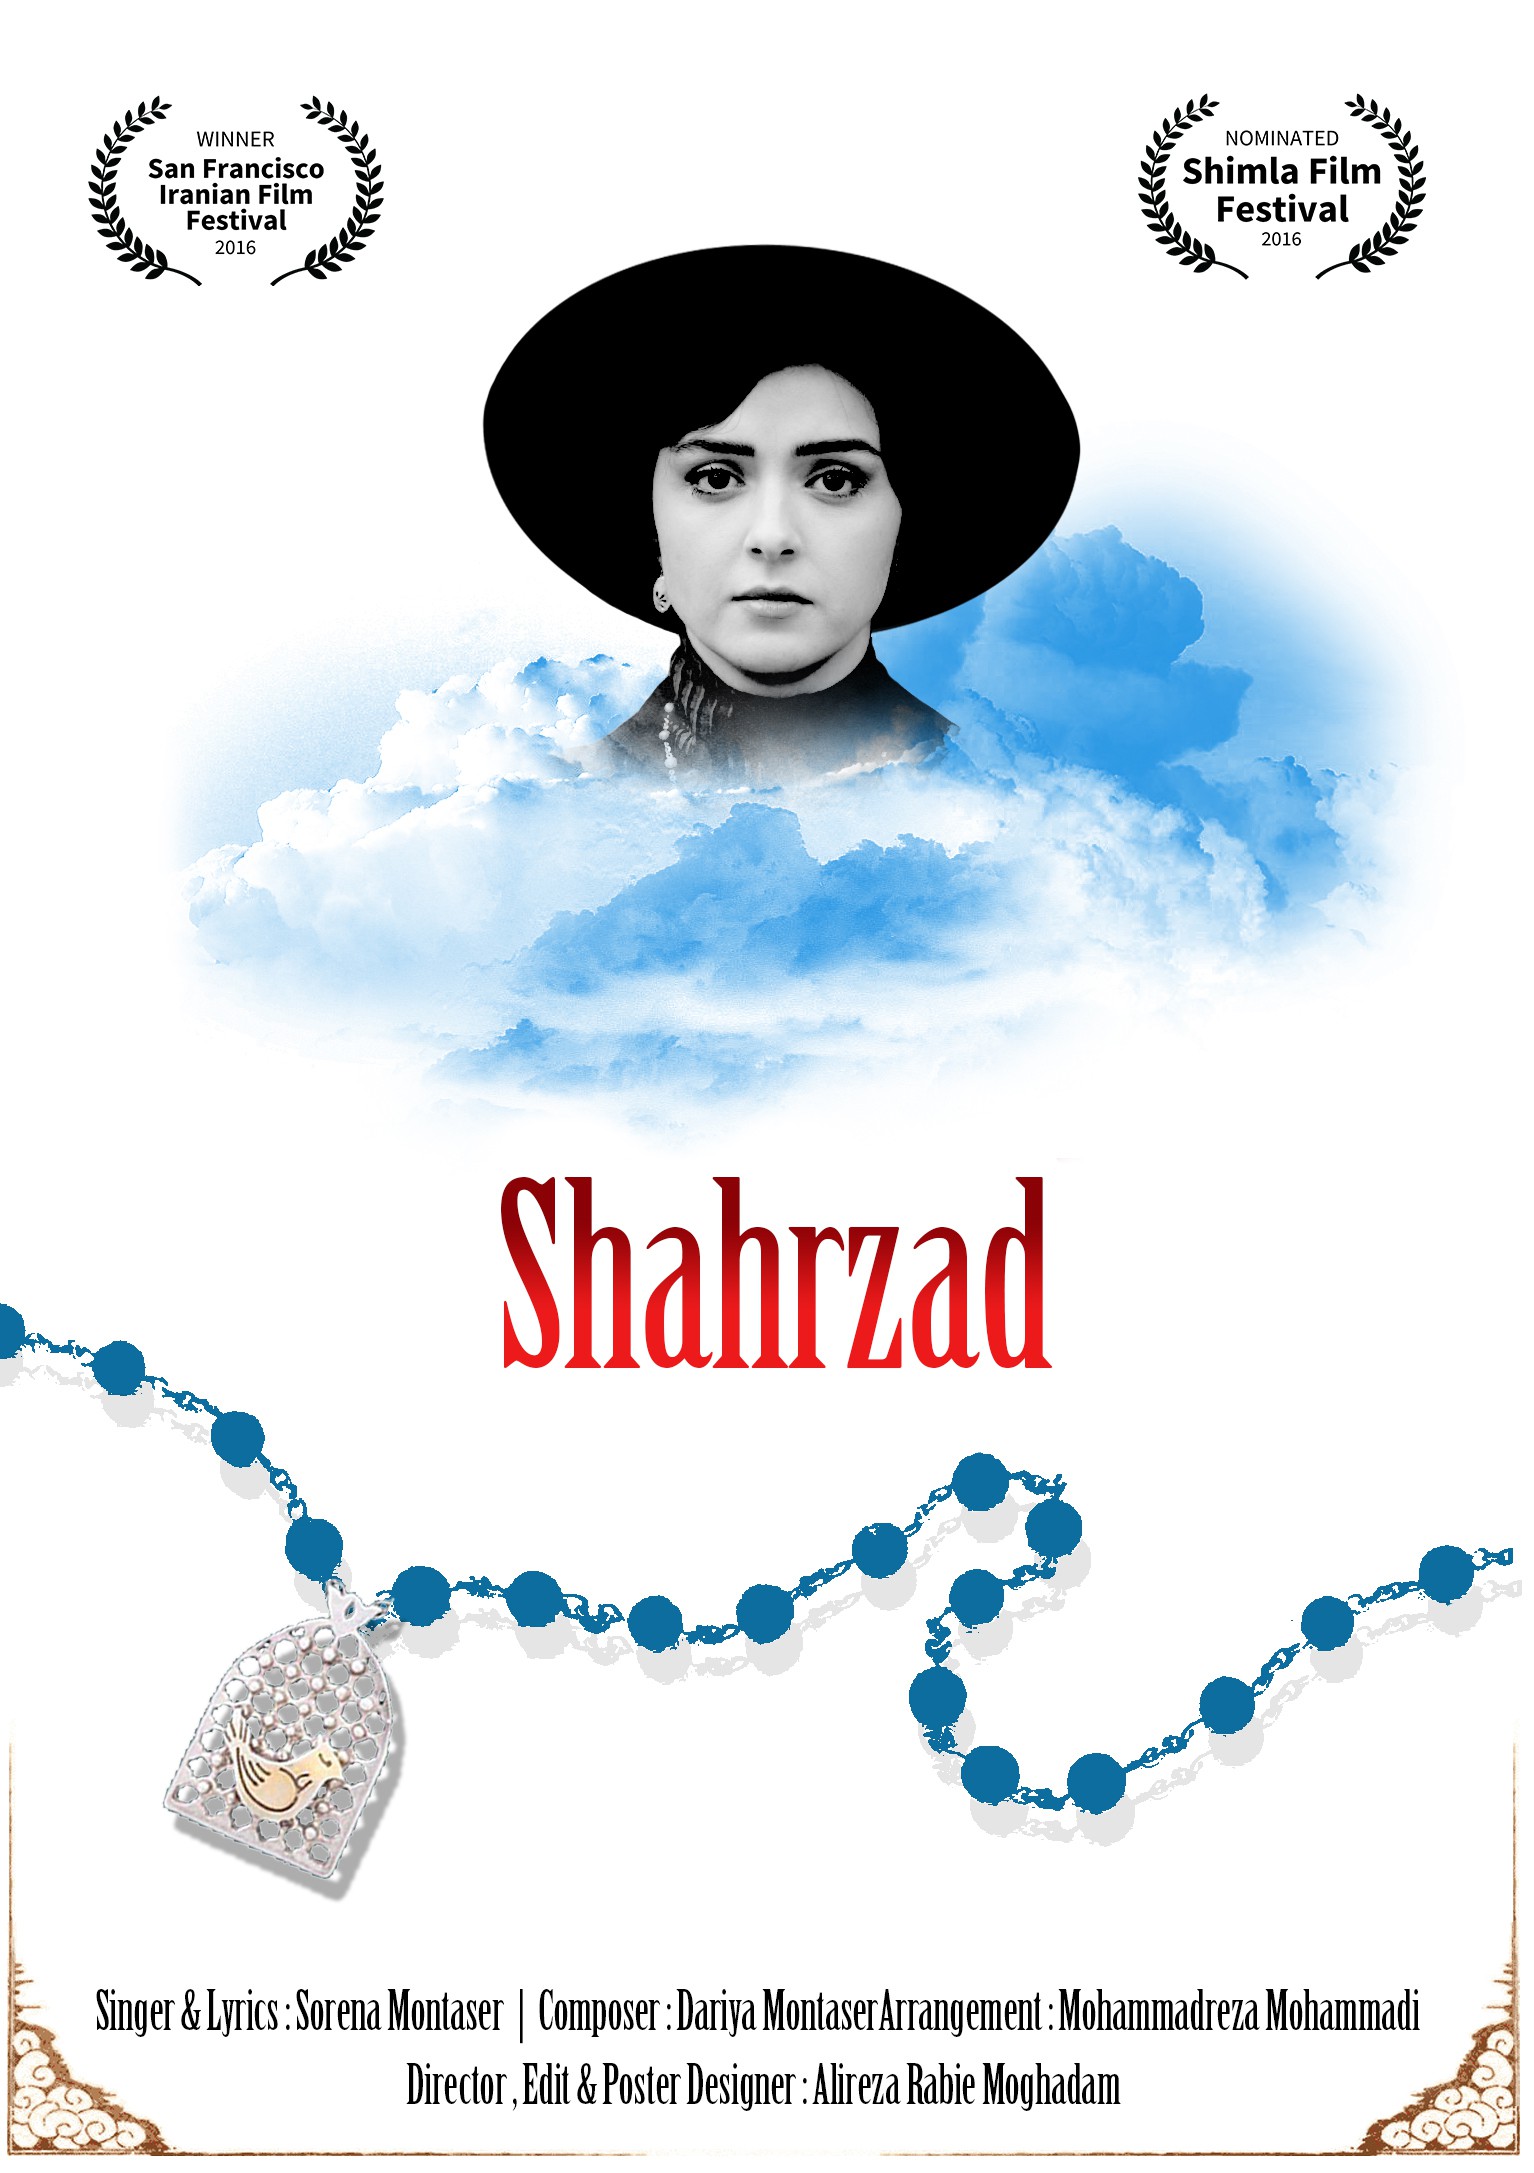 Mega Sized Movie Poster Image for Shahrzad